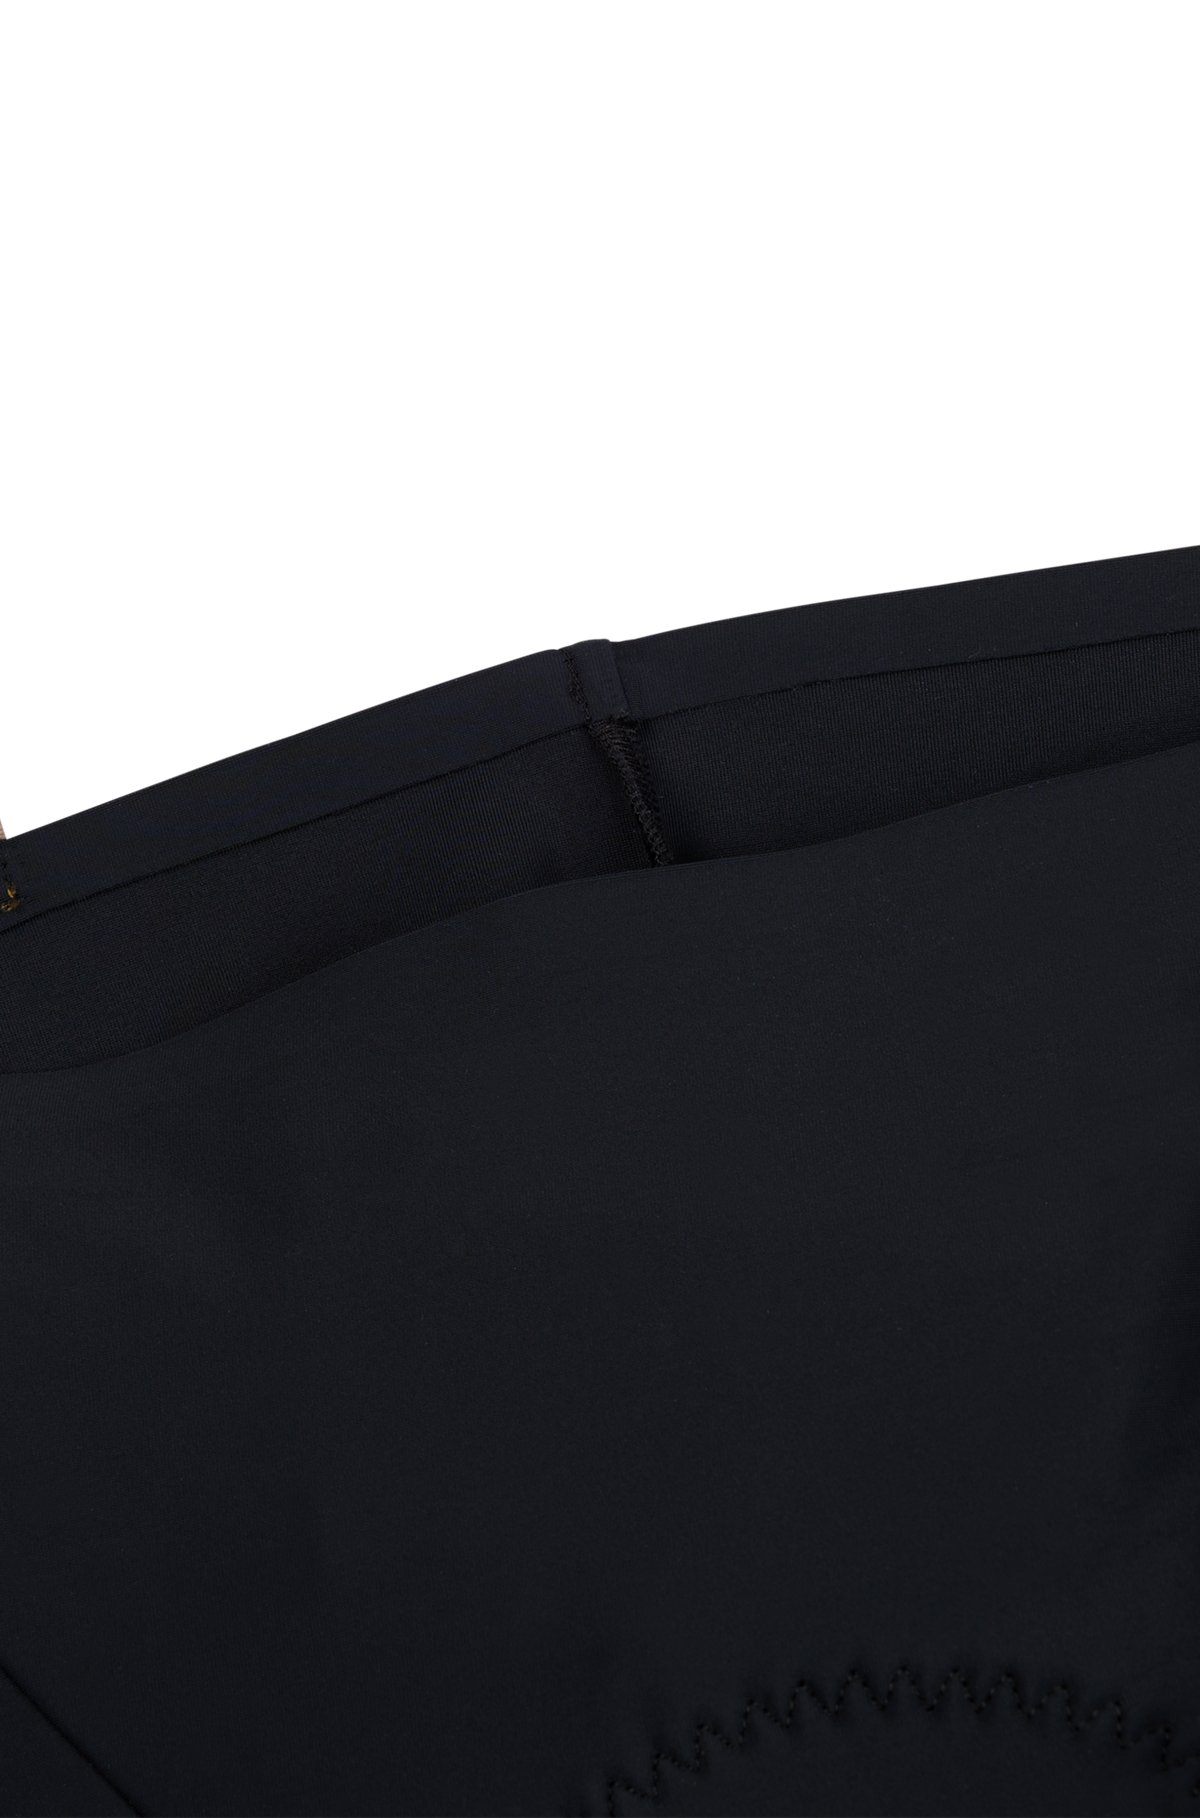 BOSS x ASSOS bib shorts with shock-absorbing foam inserts, Black